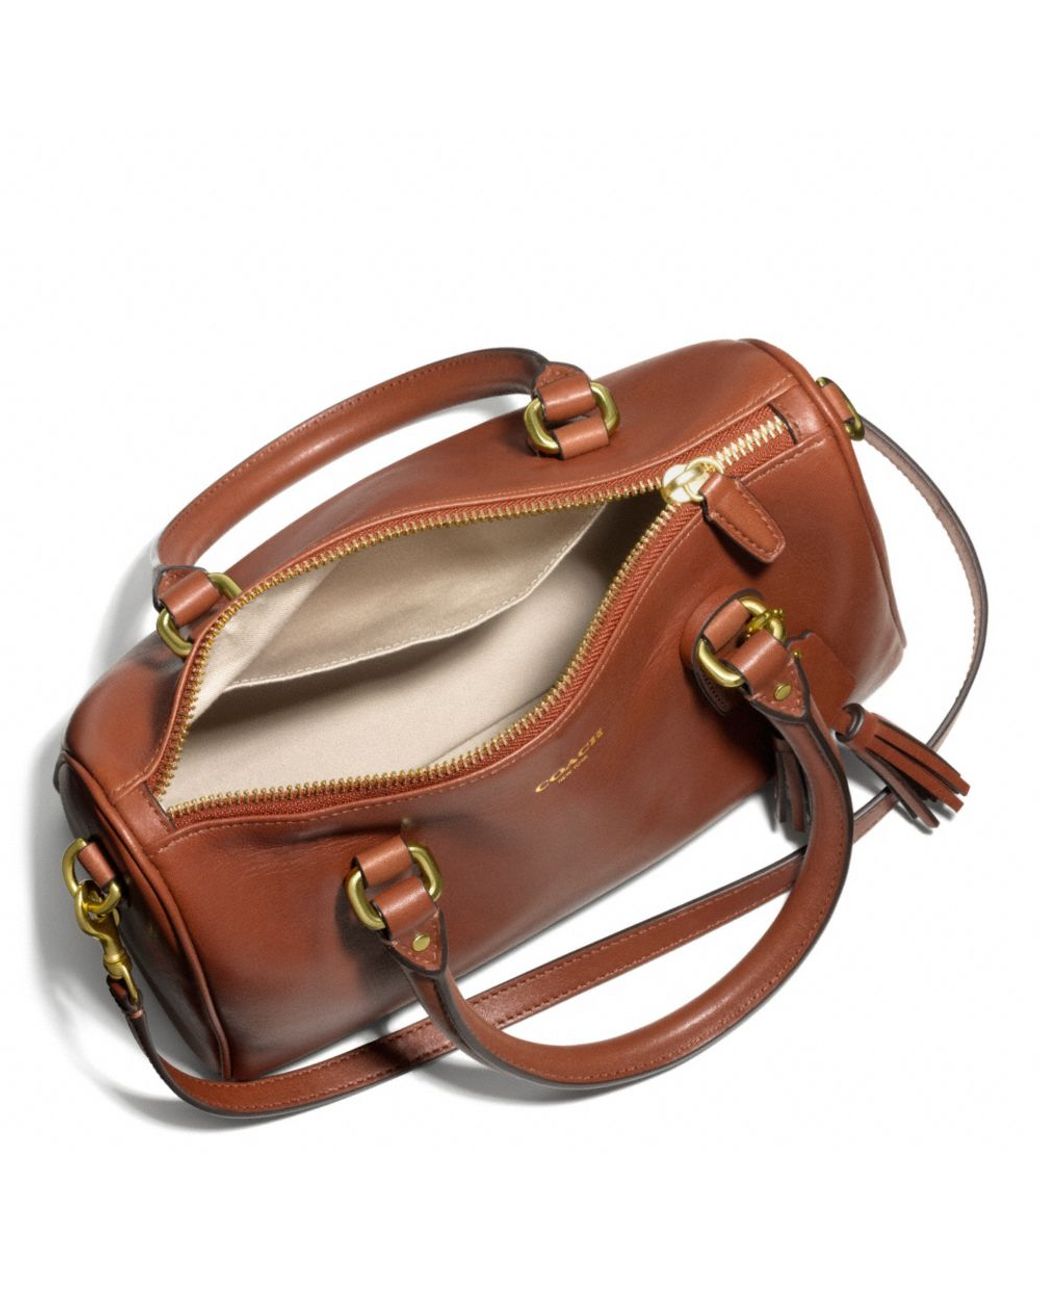 Coach Peyton Cora Domed Brown Leather Satchel Handbag Bag Purse F25671 |  eBay